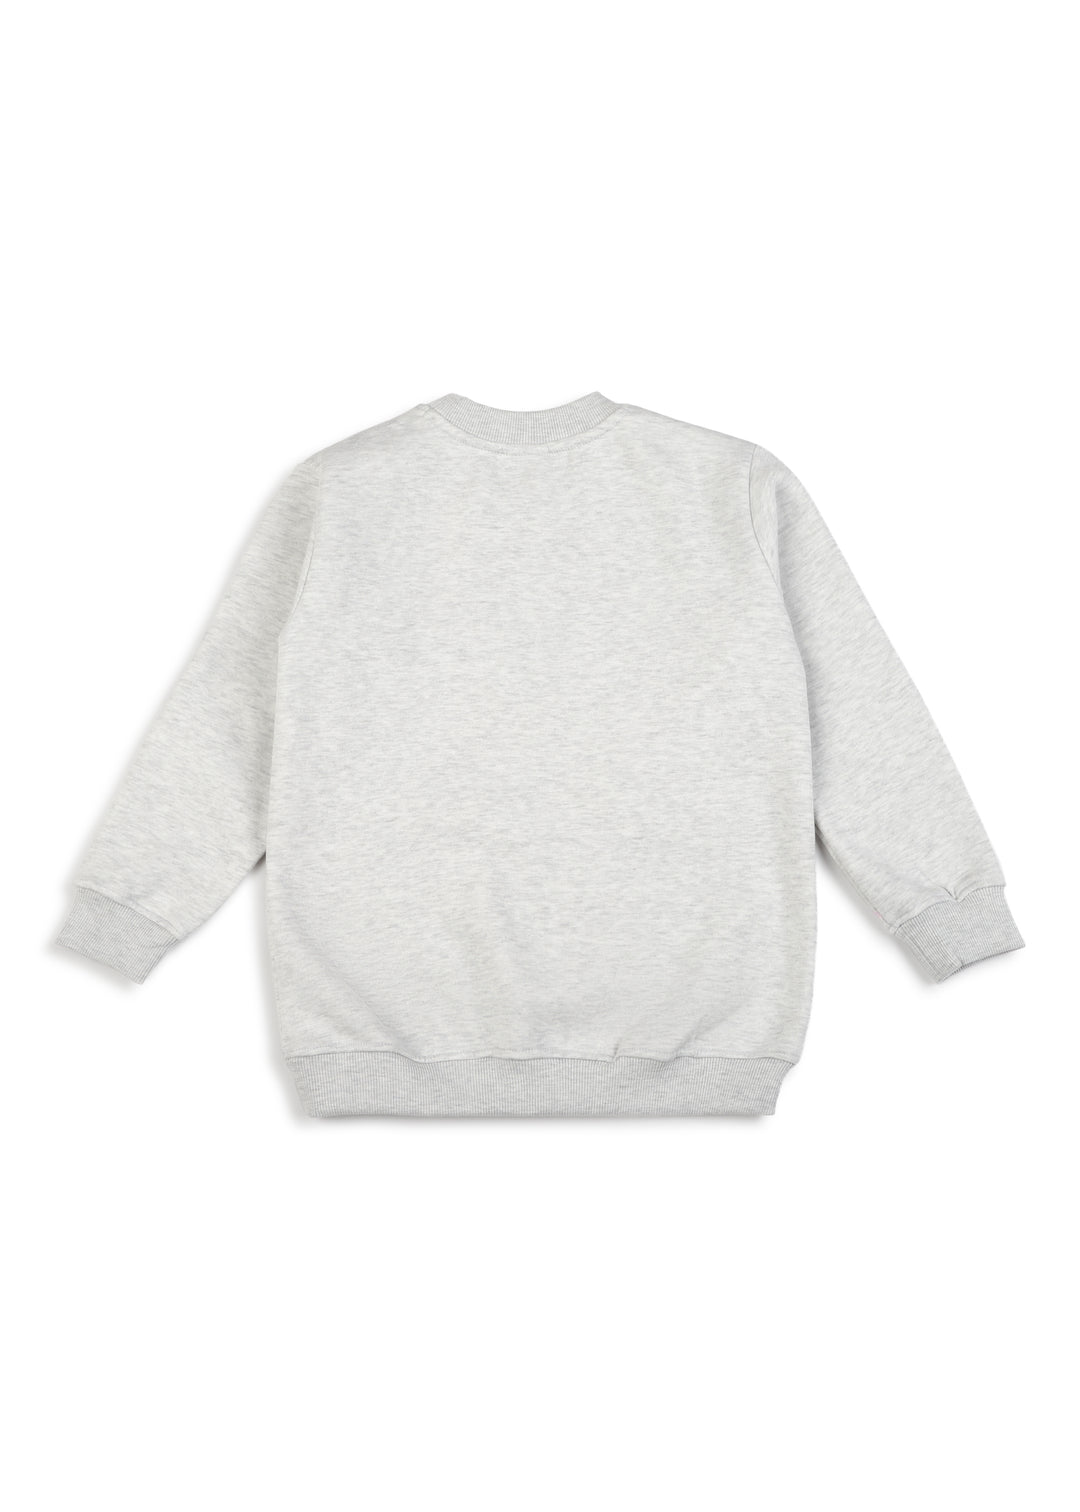 Peppa No.3 Warm Fleece Kids Sweatshirt